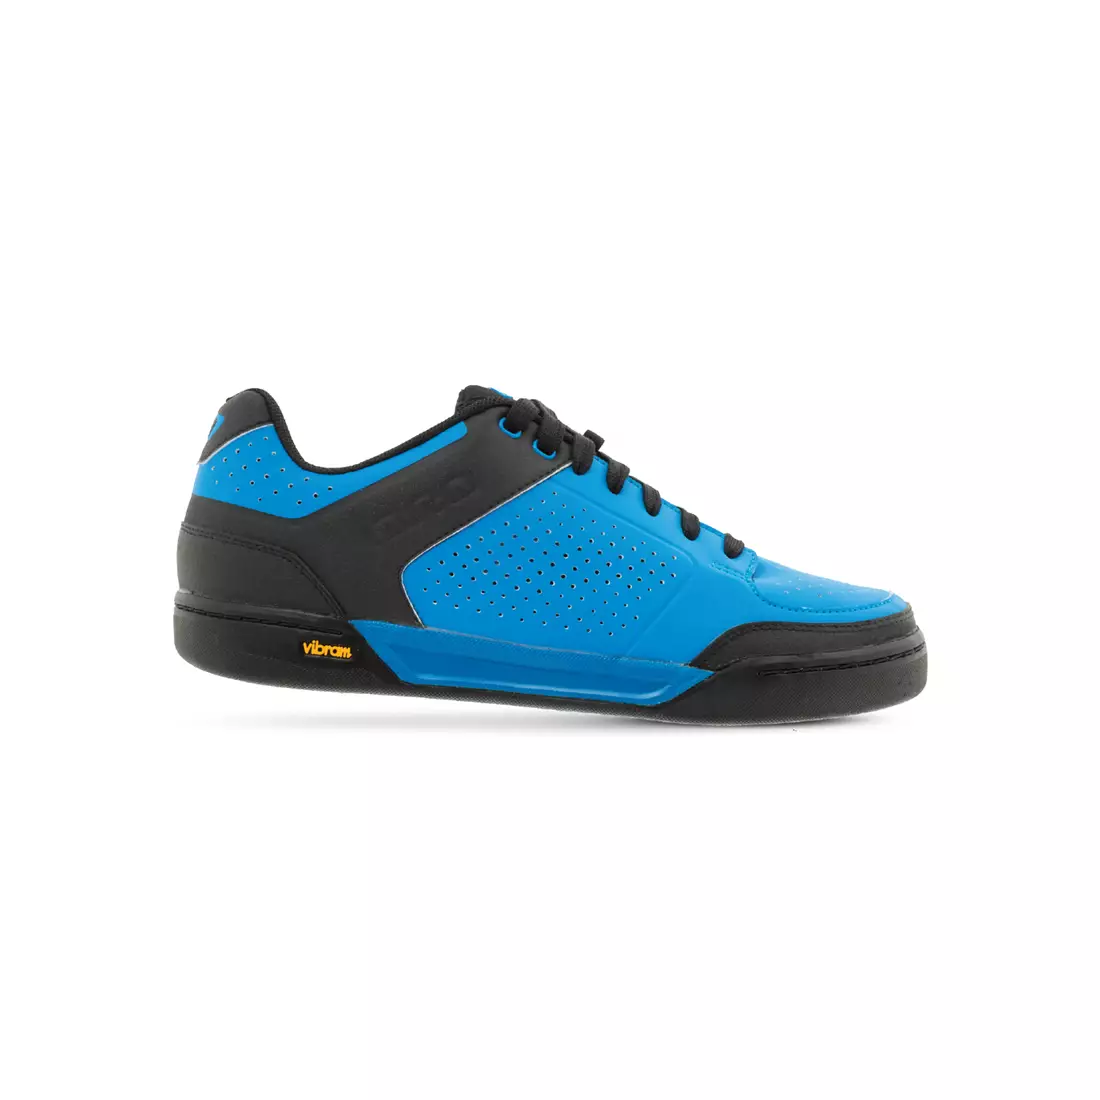 Pánská cyklistická obuv GIRO RIDDANCE blue jewel black 